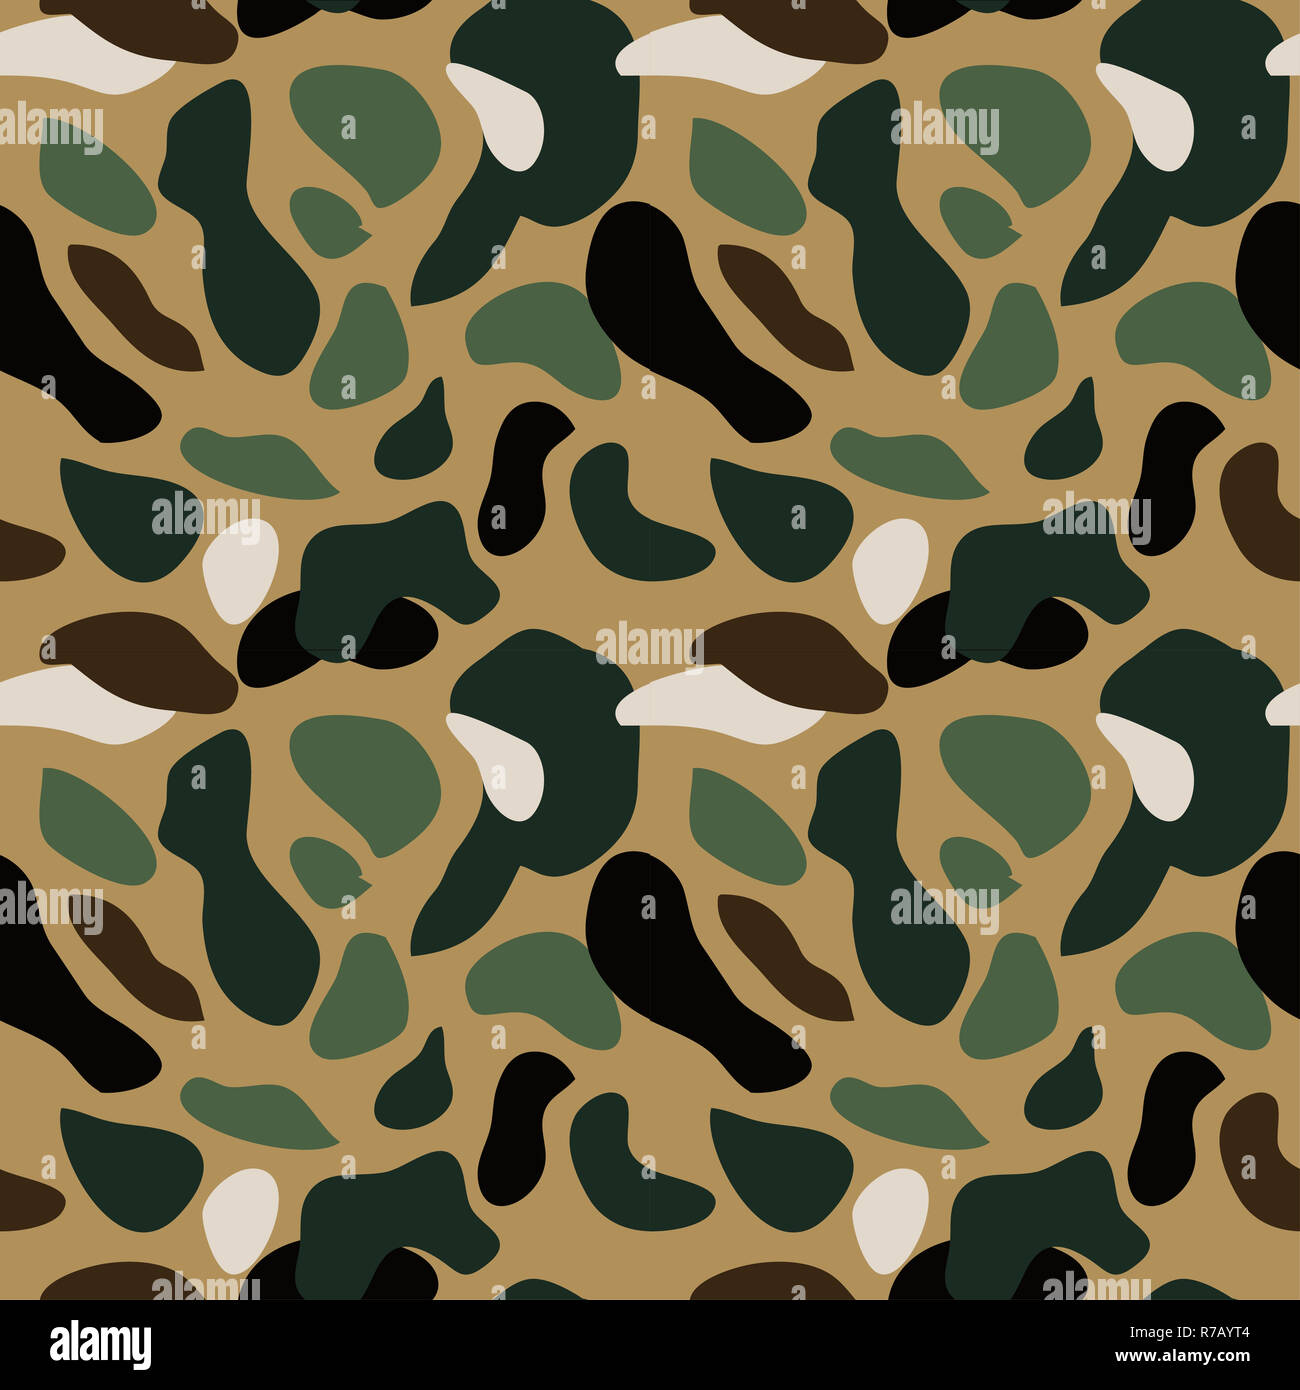 Soldier khaki camouflage seamless background hi-res stock